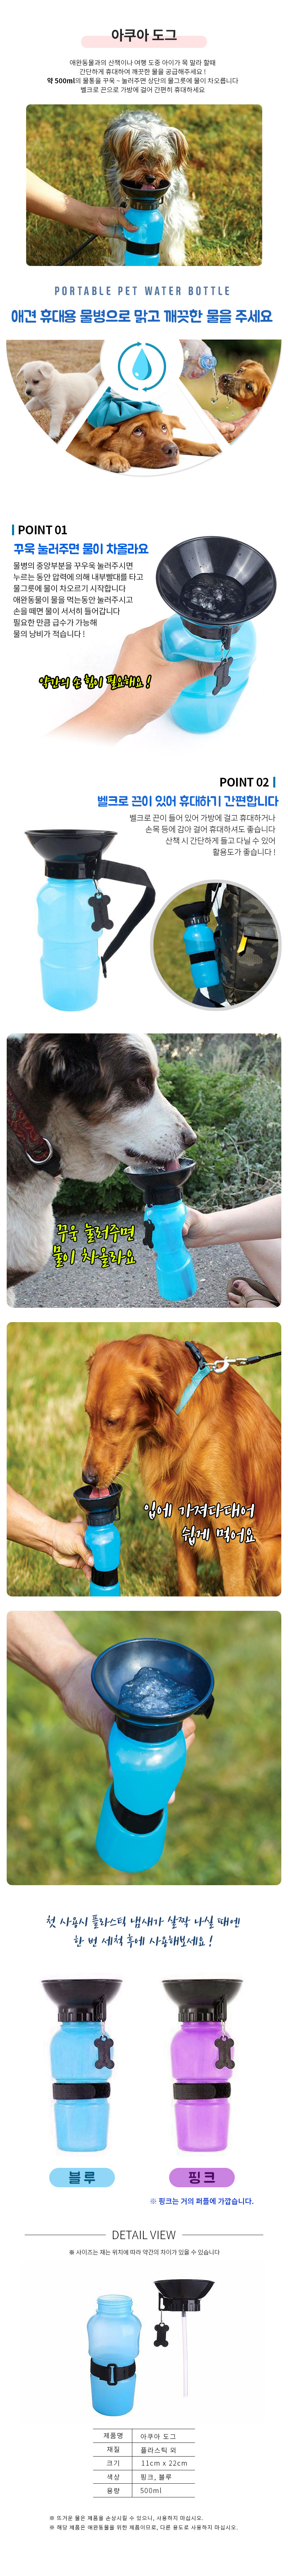 dog-water-bottle-2-3-1-1-.jpg